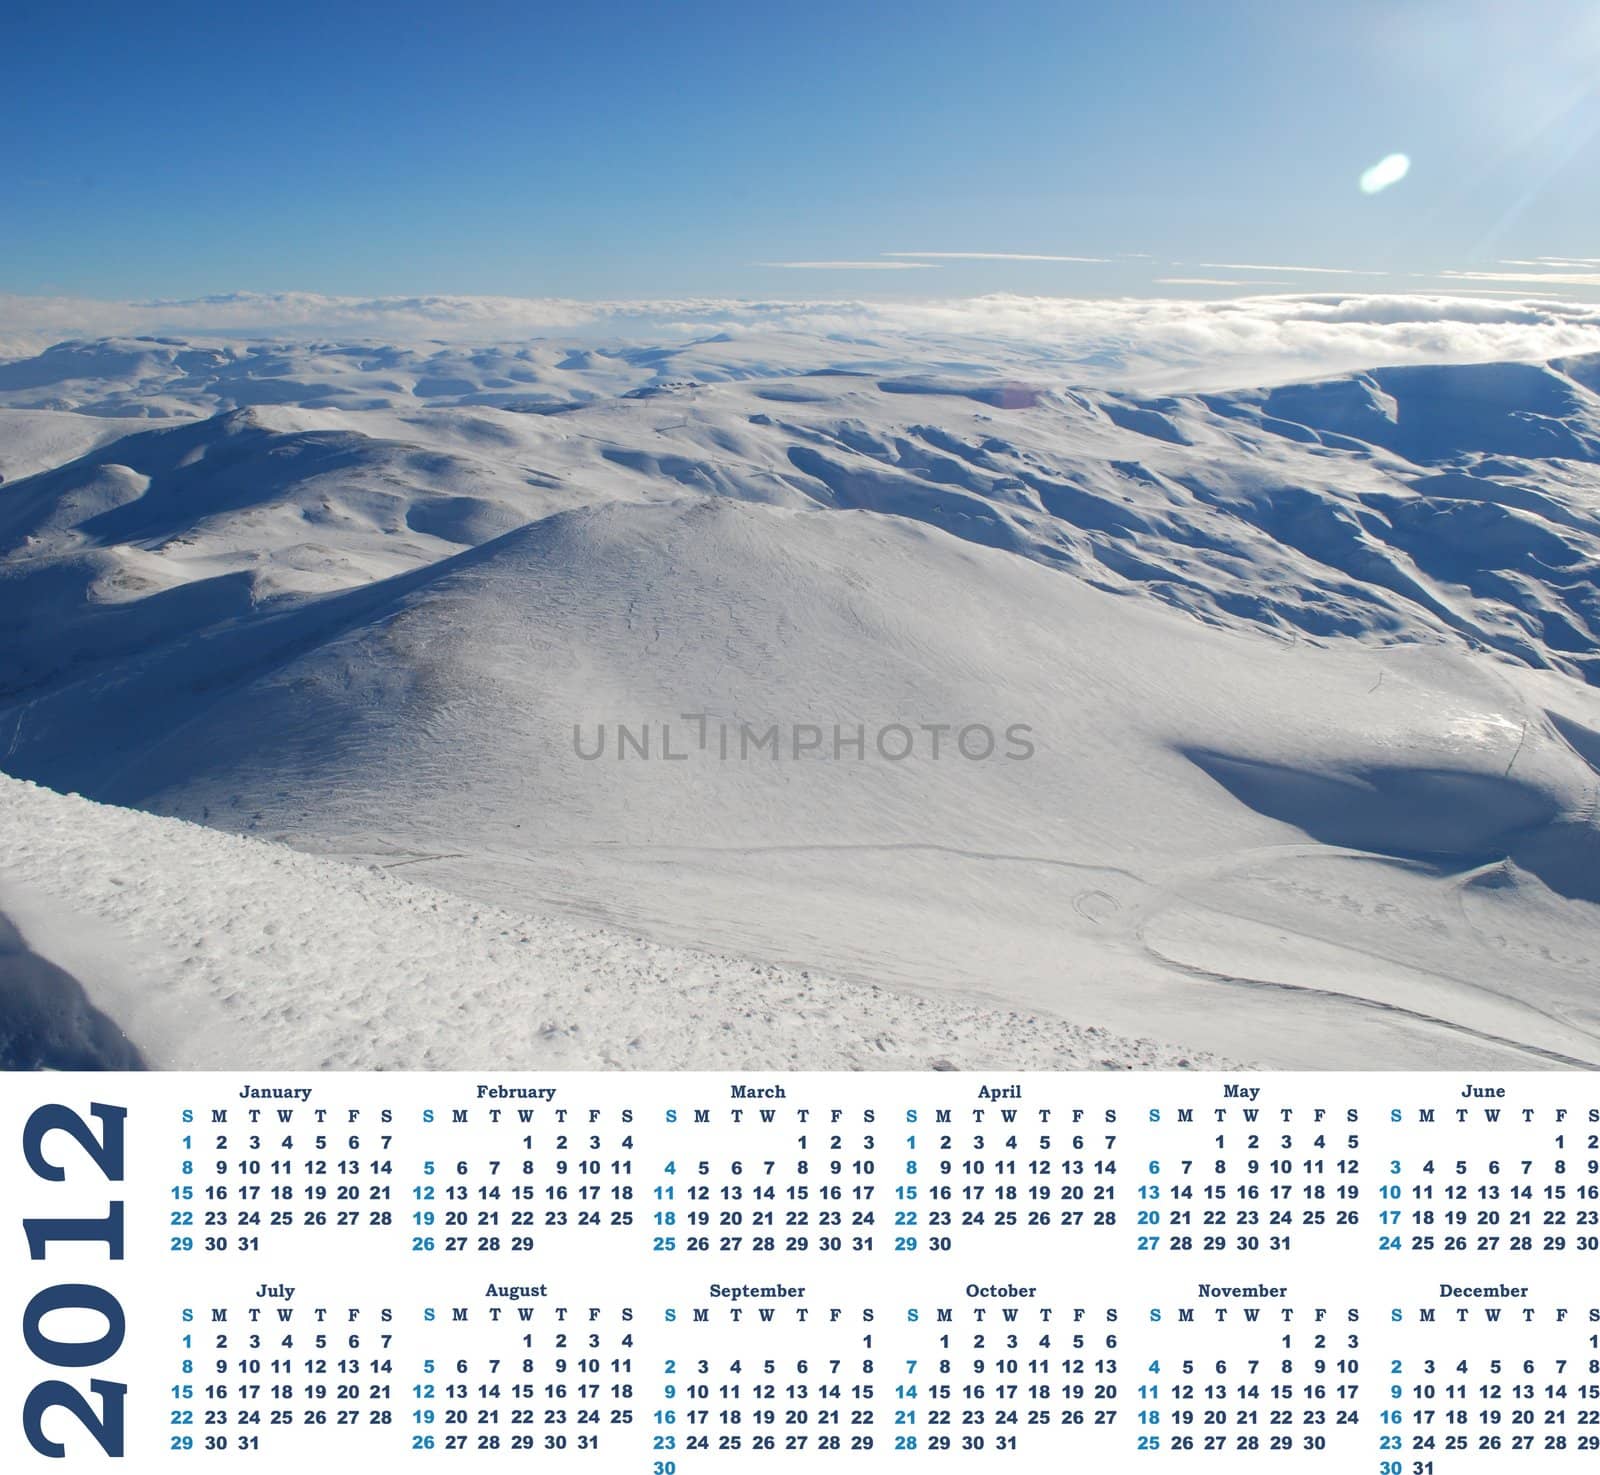 calendar 2012  with view of snow mountains in Turkey Palandoken Erzurum ski resort  by svtrotof